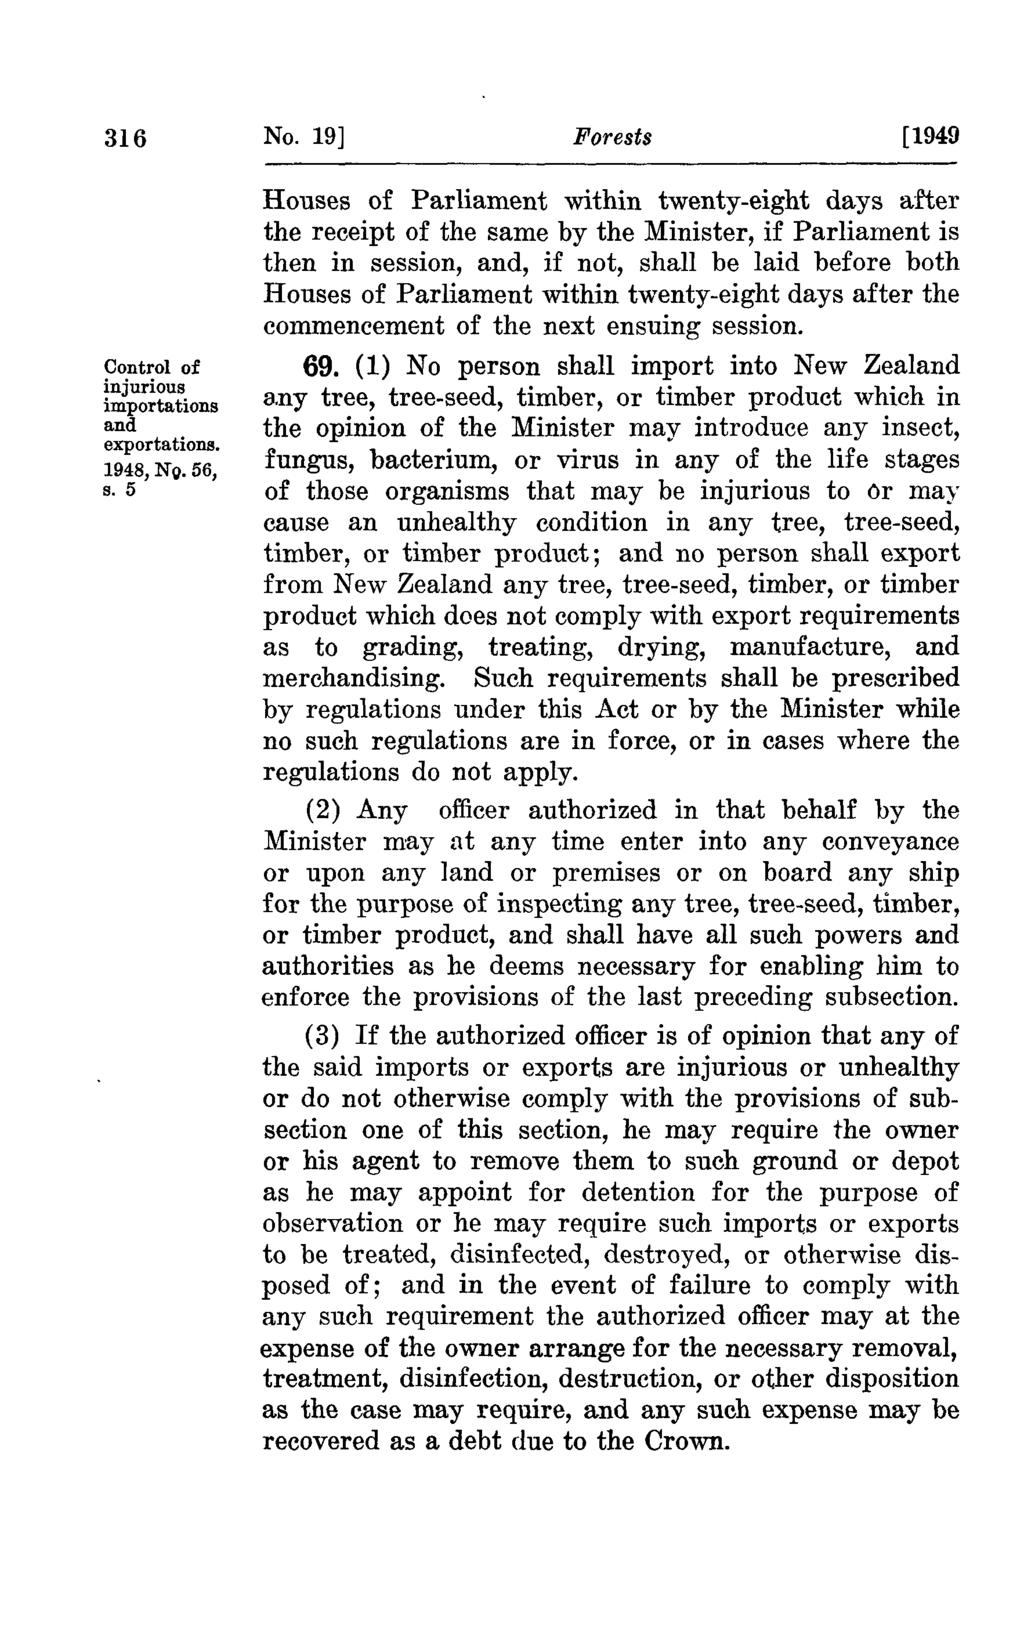 316 Control of injurious importations and exportations. 1948, NO. 56, s. 5 No.